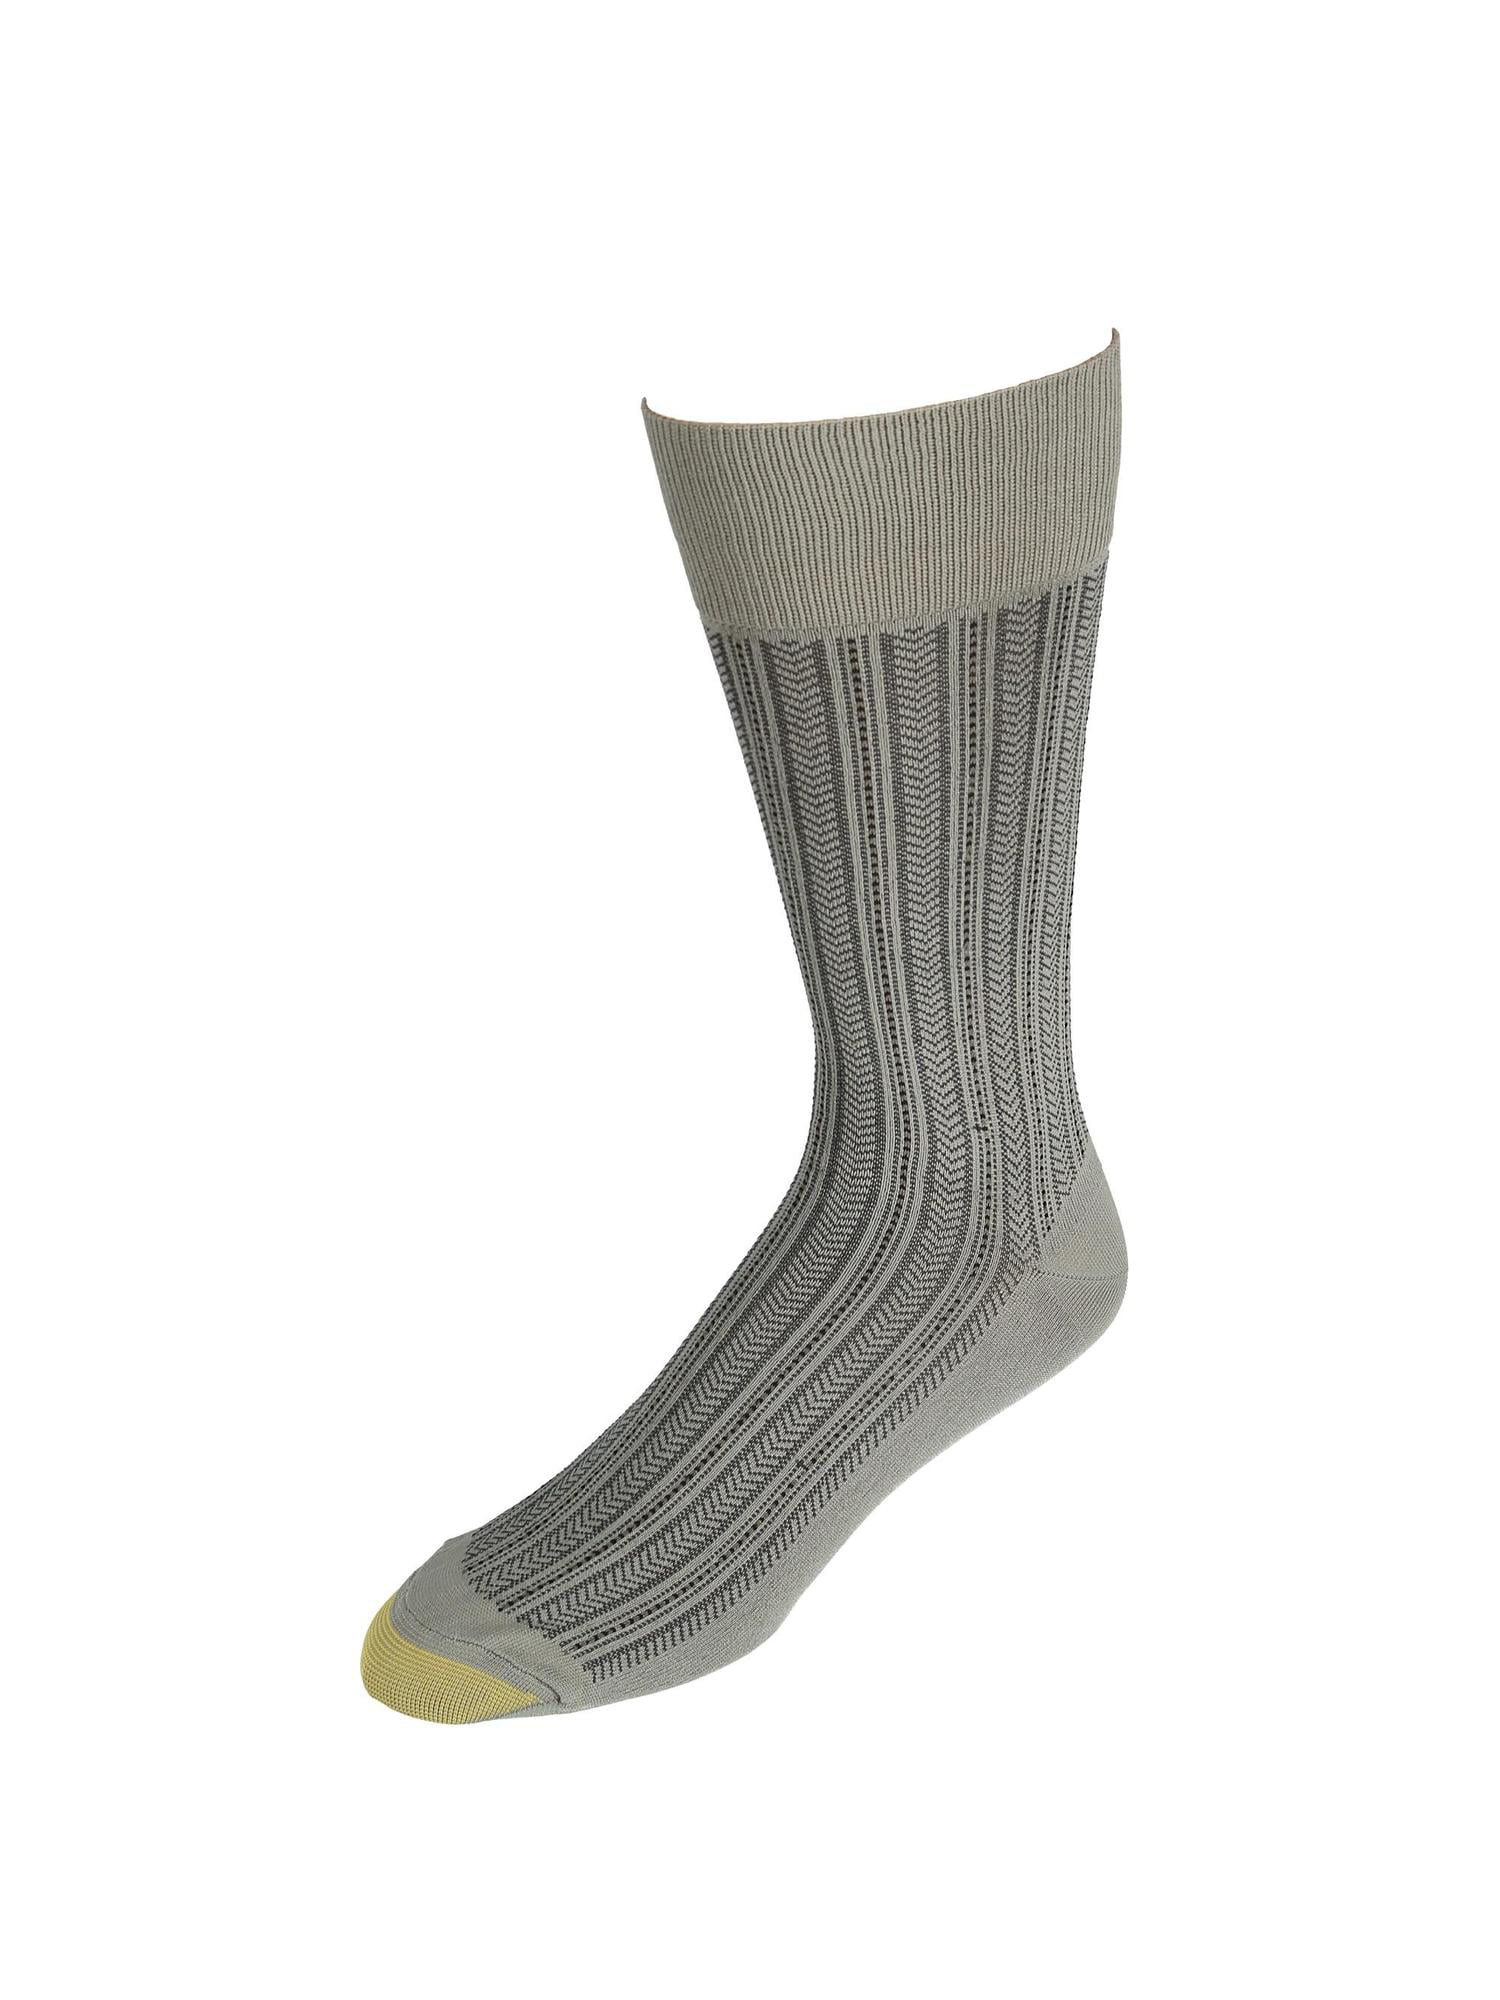 New Gold Toe Men's Moisture Control Manhattan Dress Socks 3 Pair Pack